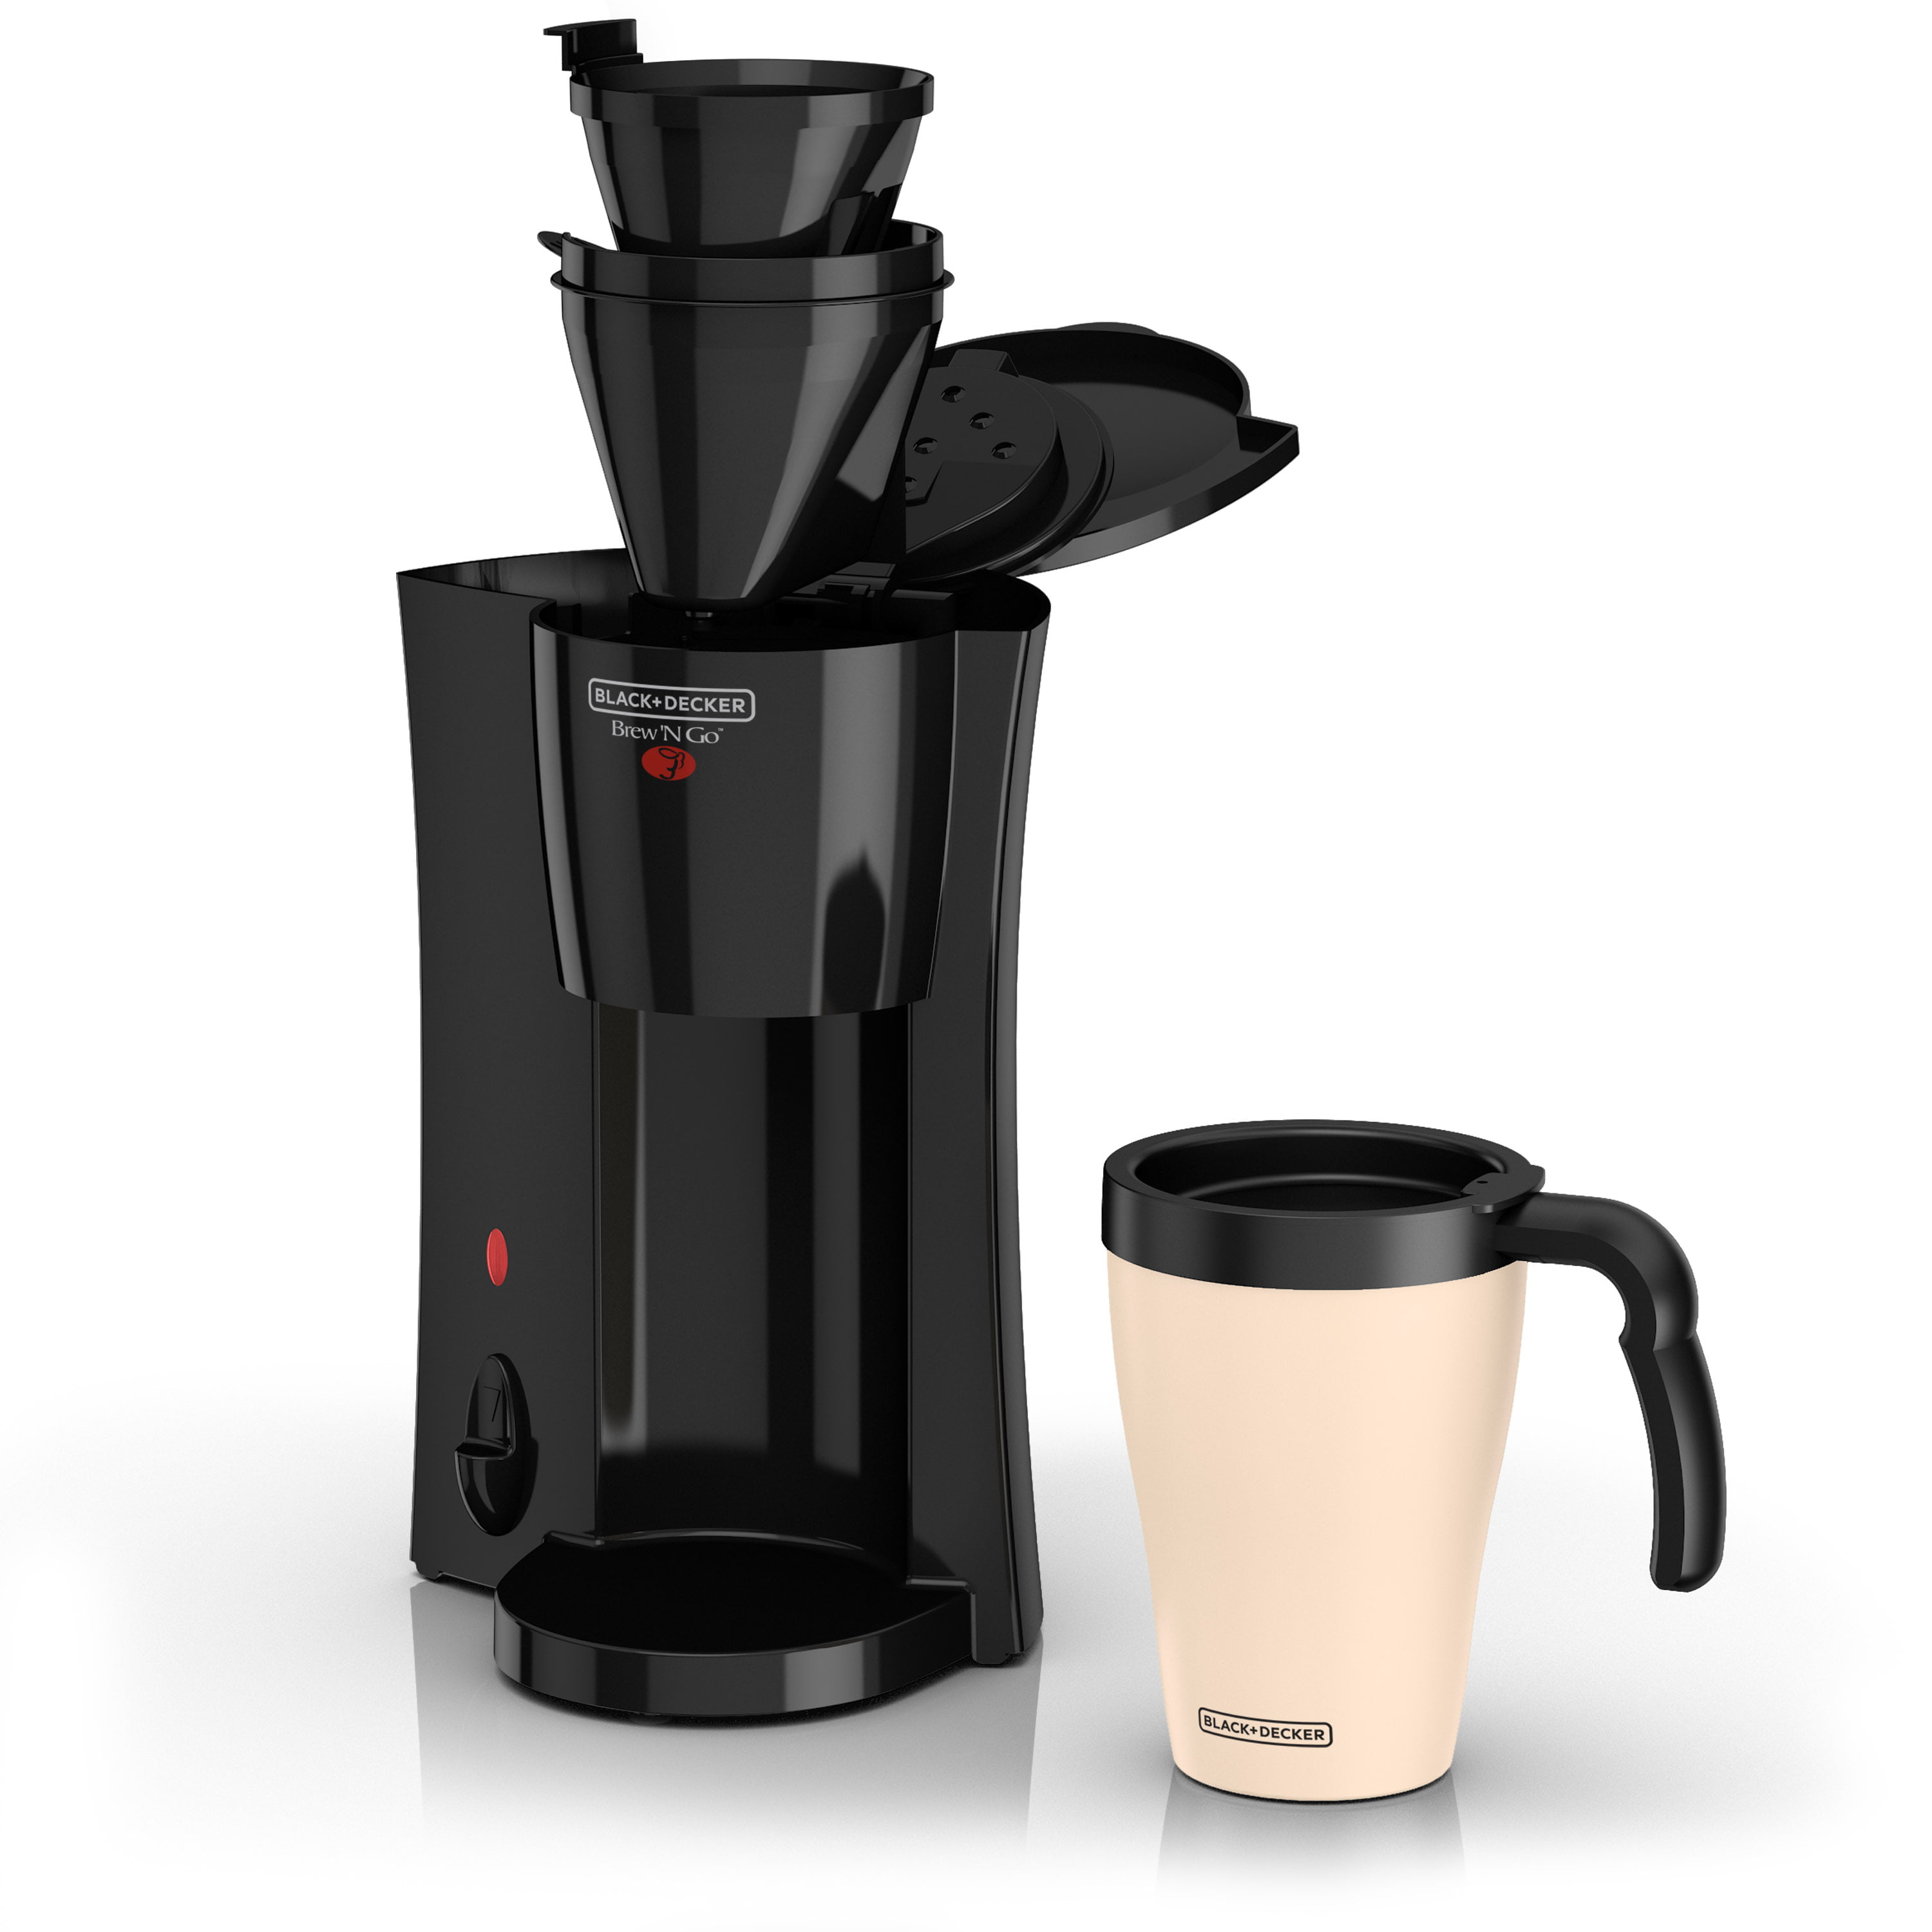 Drip coffee maker Swiss Diamond SD-DCM 001 per 2 cups Coffee